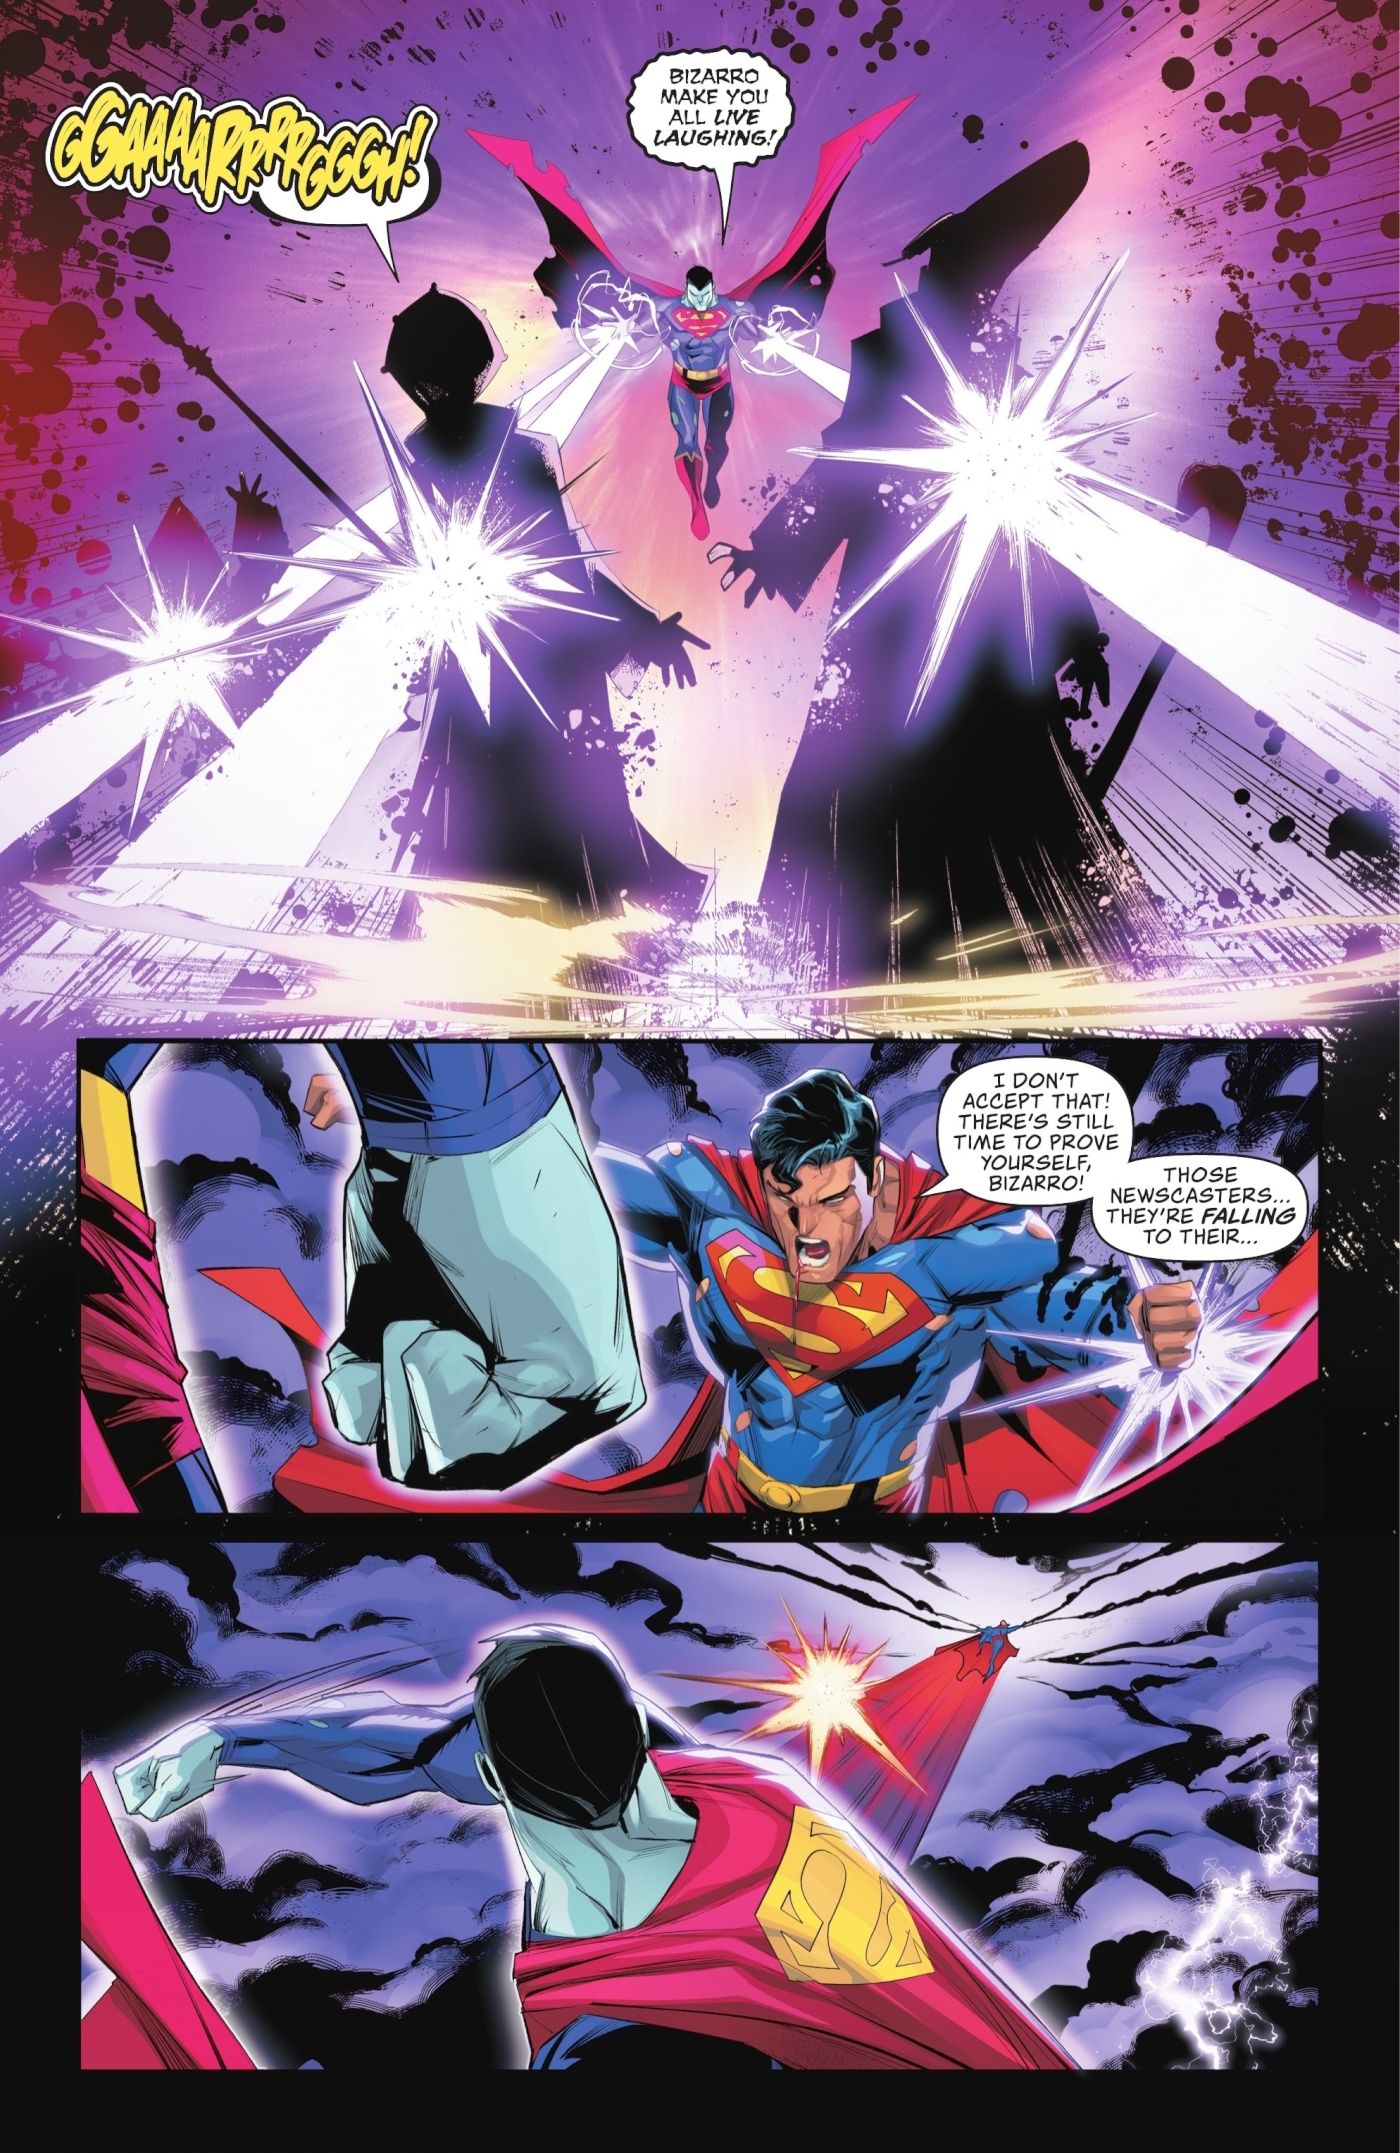 Action Comics #1061, Bizarro attacks Superman in a rage over the loss of his planet